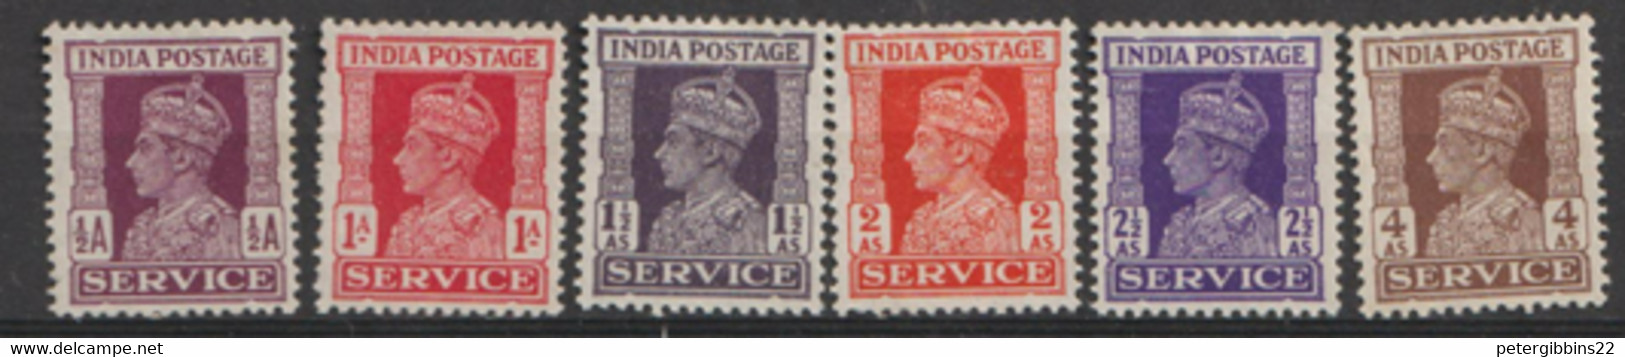 India  1959  Serviice  Various Values   Mounted Mint - Ungebraucht